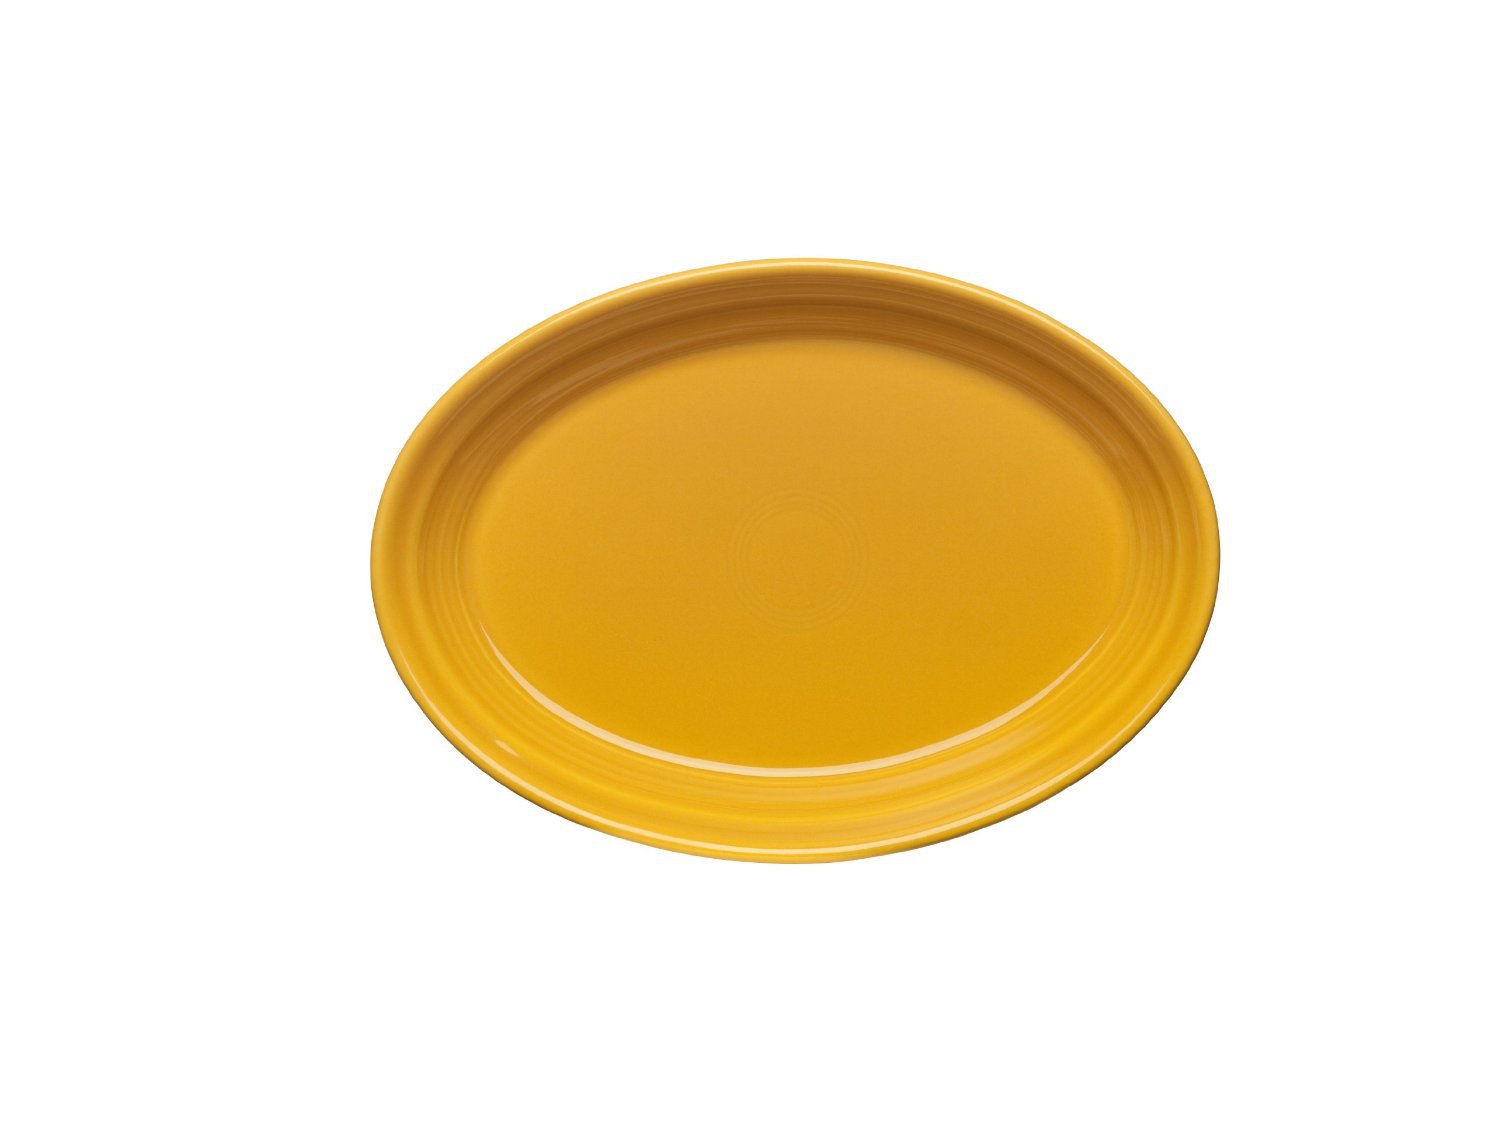 Fiesta 11 5/8 Inch Oval Platter, Marigold 1st Quality - Platters